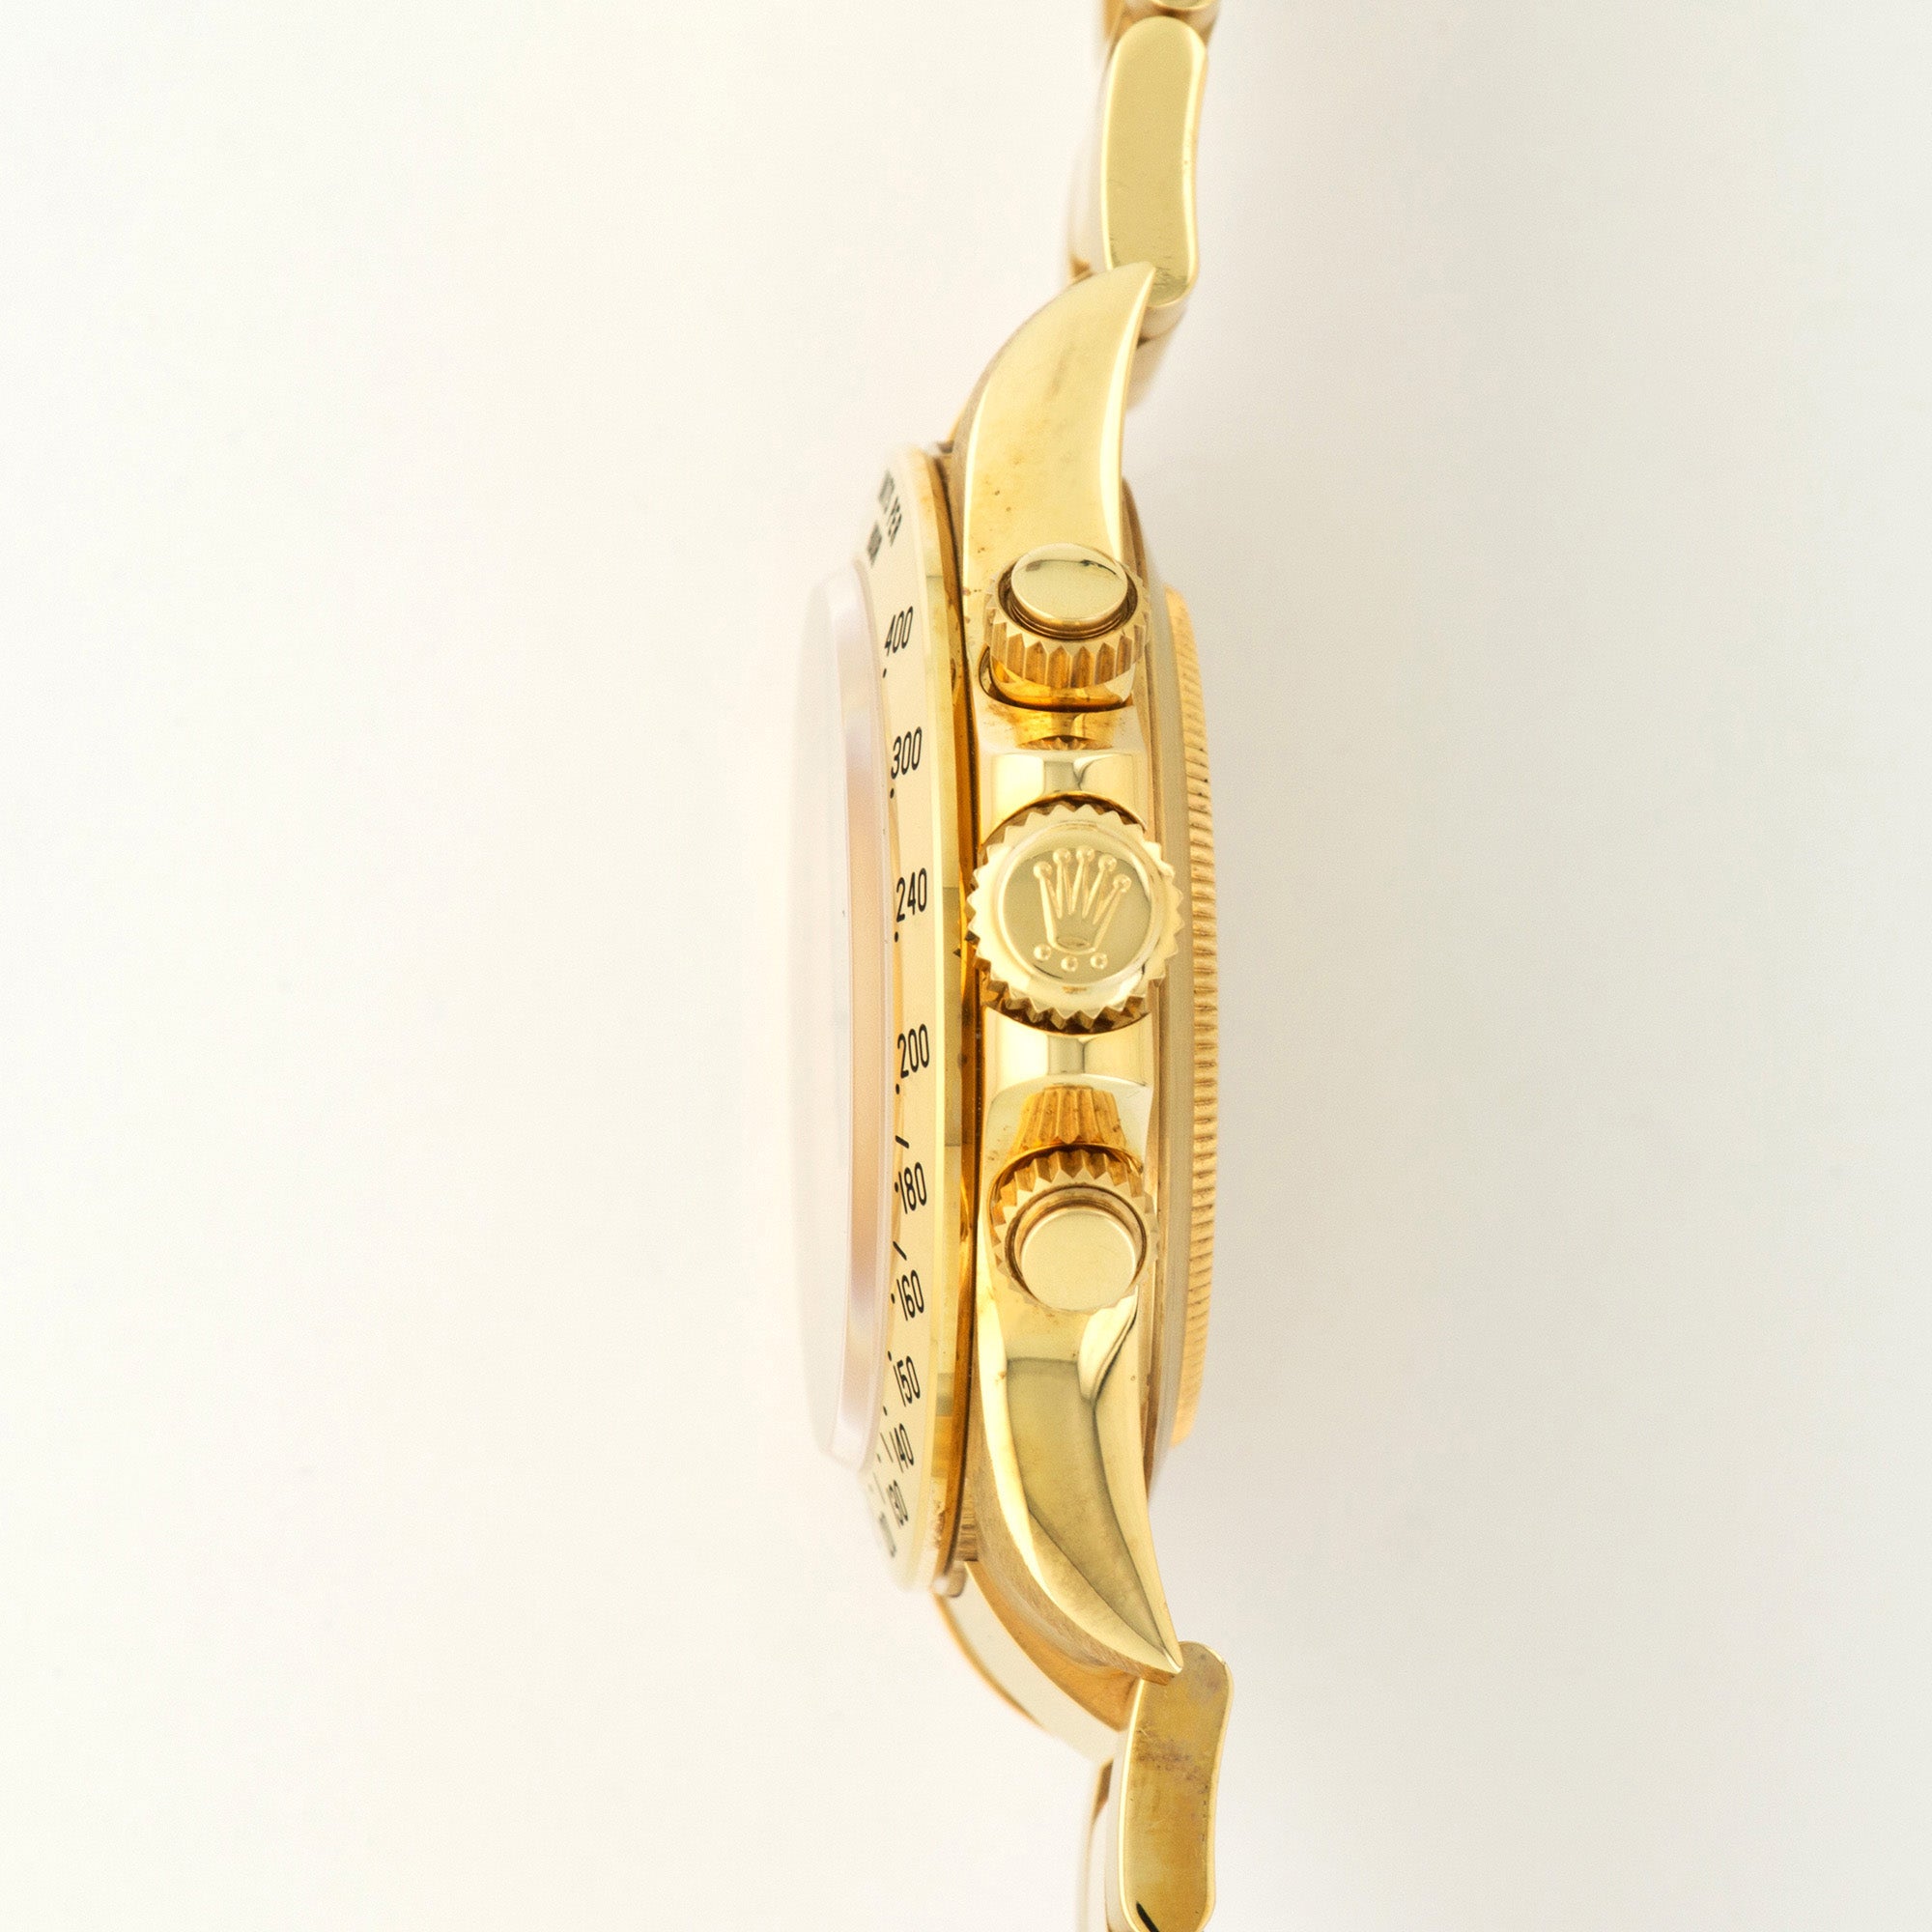 Rolex - New Old Stock Rolex Yellow Gold Daytona Watch Ref. 16528 - The Keystone Watches